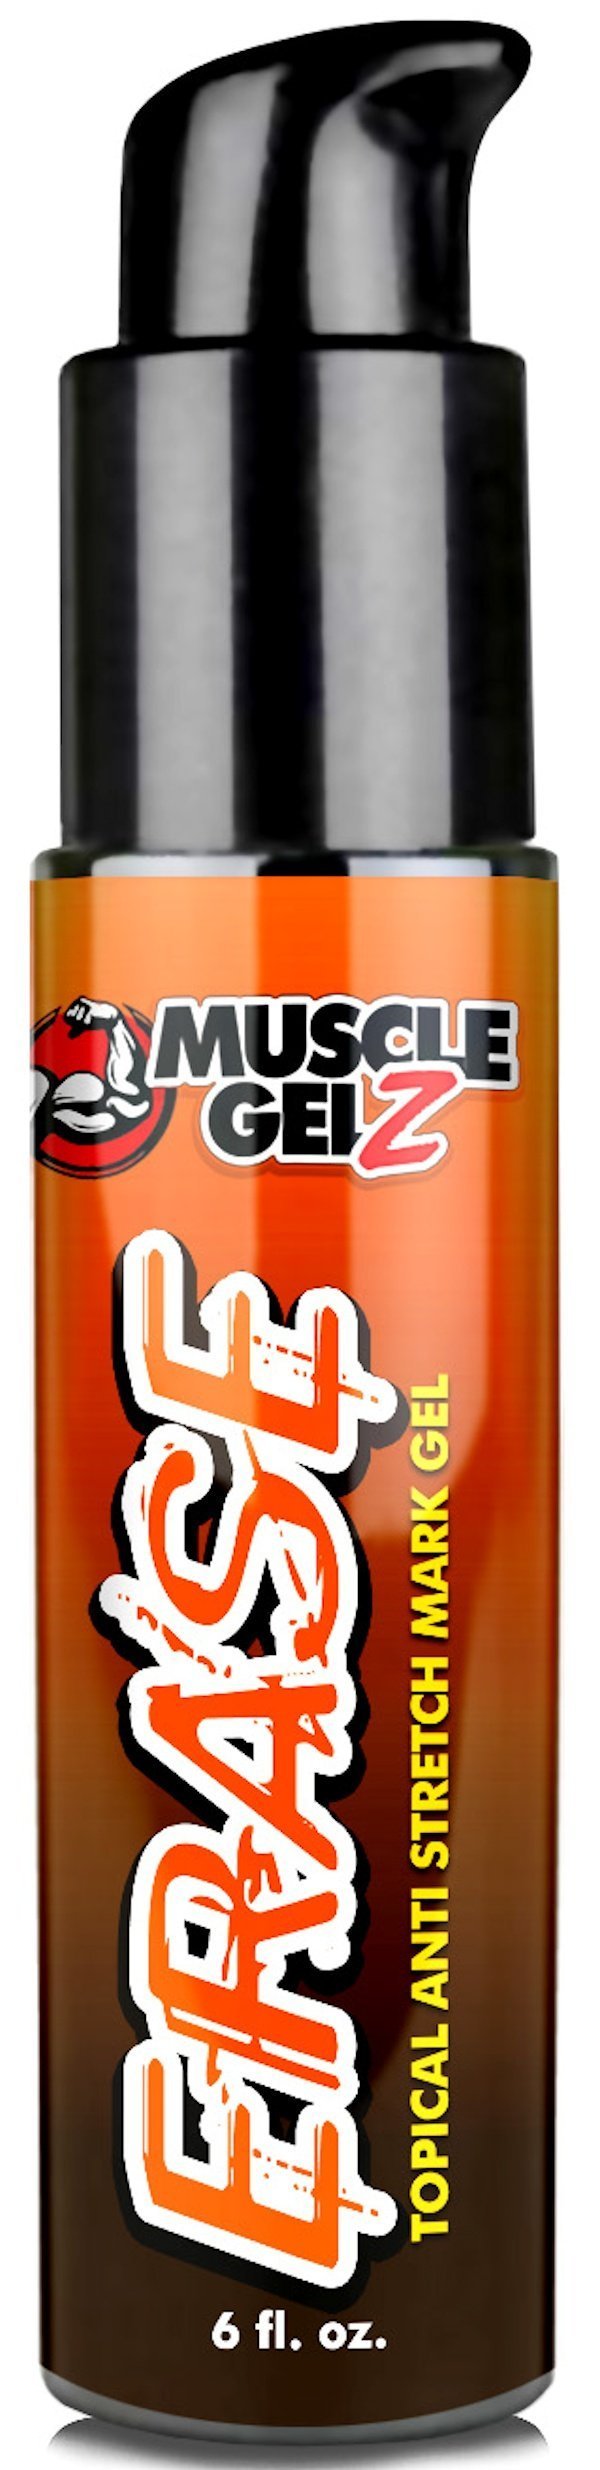 Muscle Gelz Erase Stretch Mark Gel 8oz|Lowcostvitamin.com